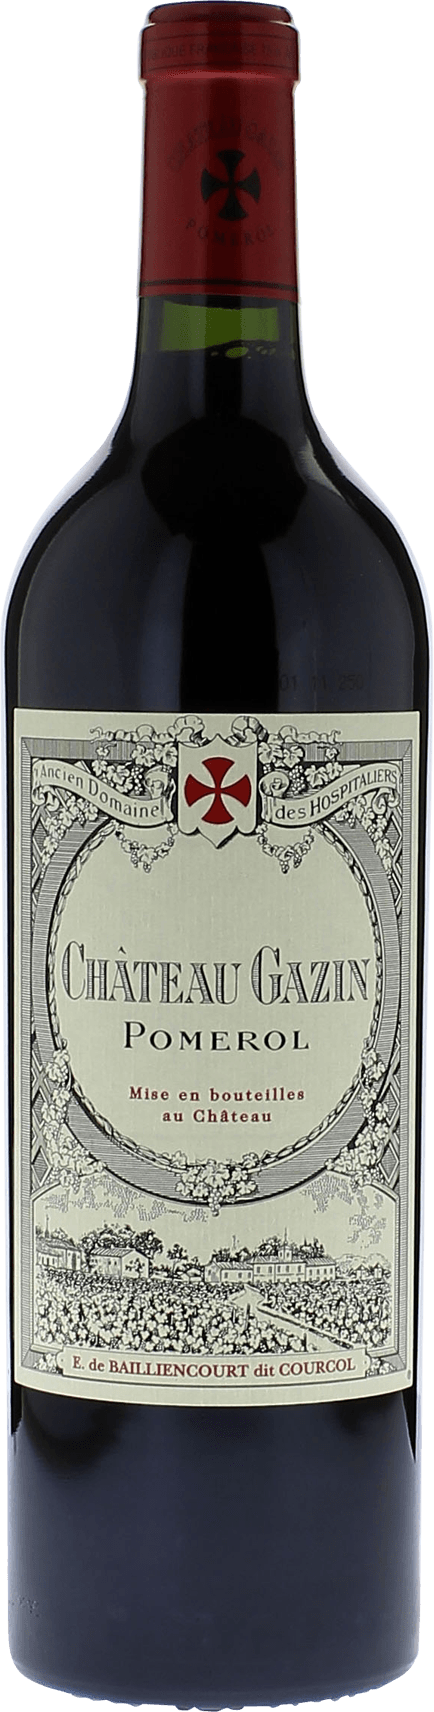 Gazin 1989  Pomerol, Bordeaux rouge